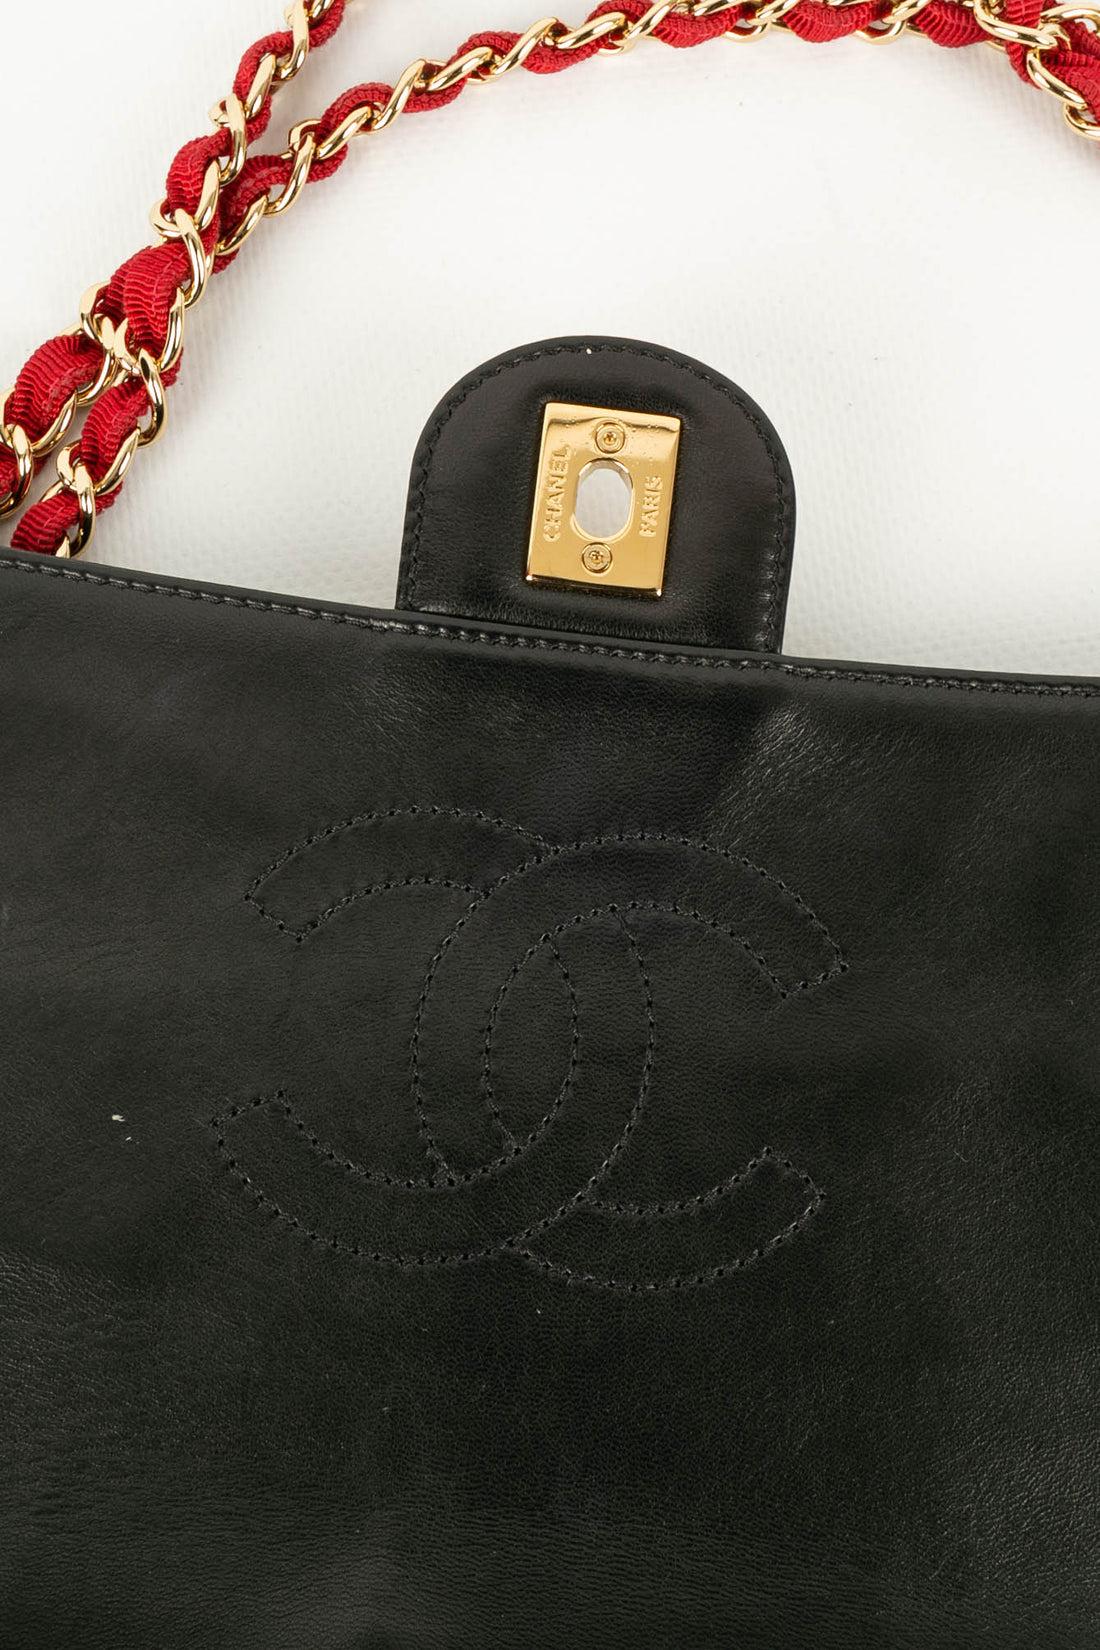 Chanel Black and White Stripes Bag, 2014 6